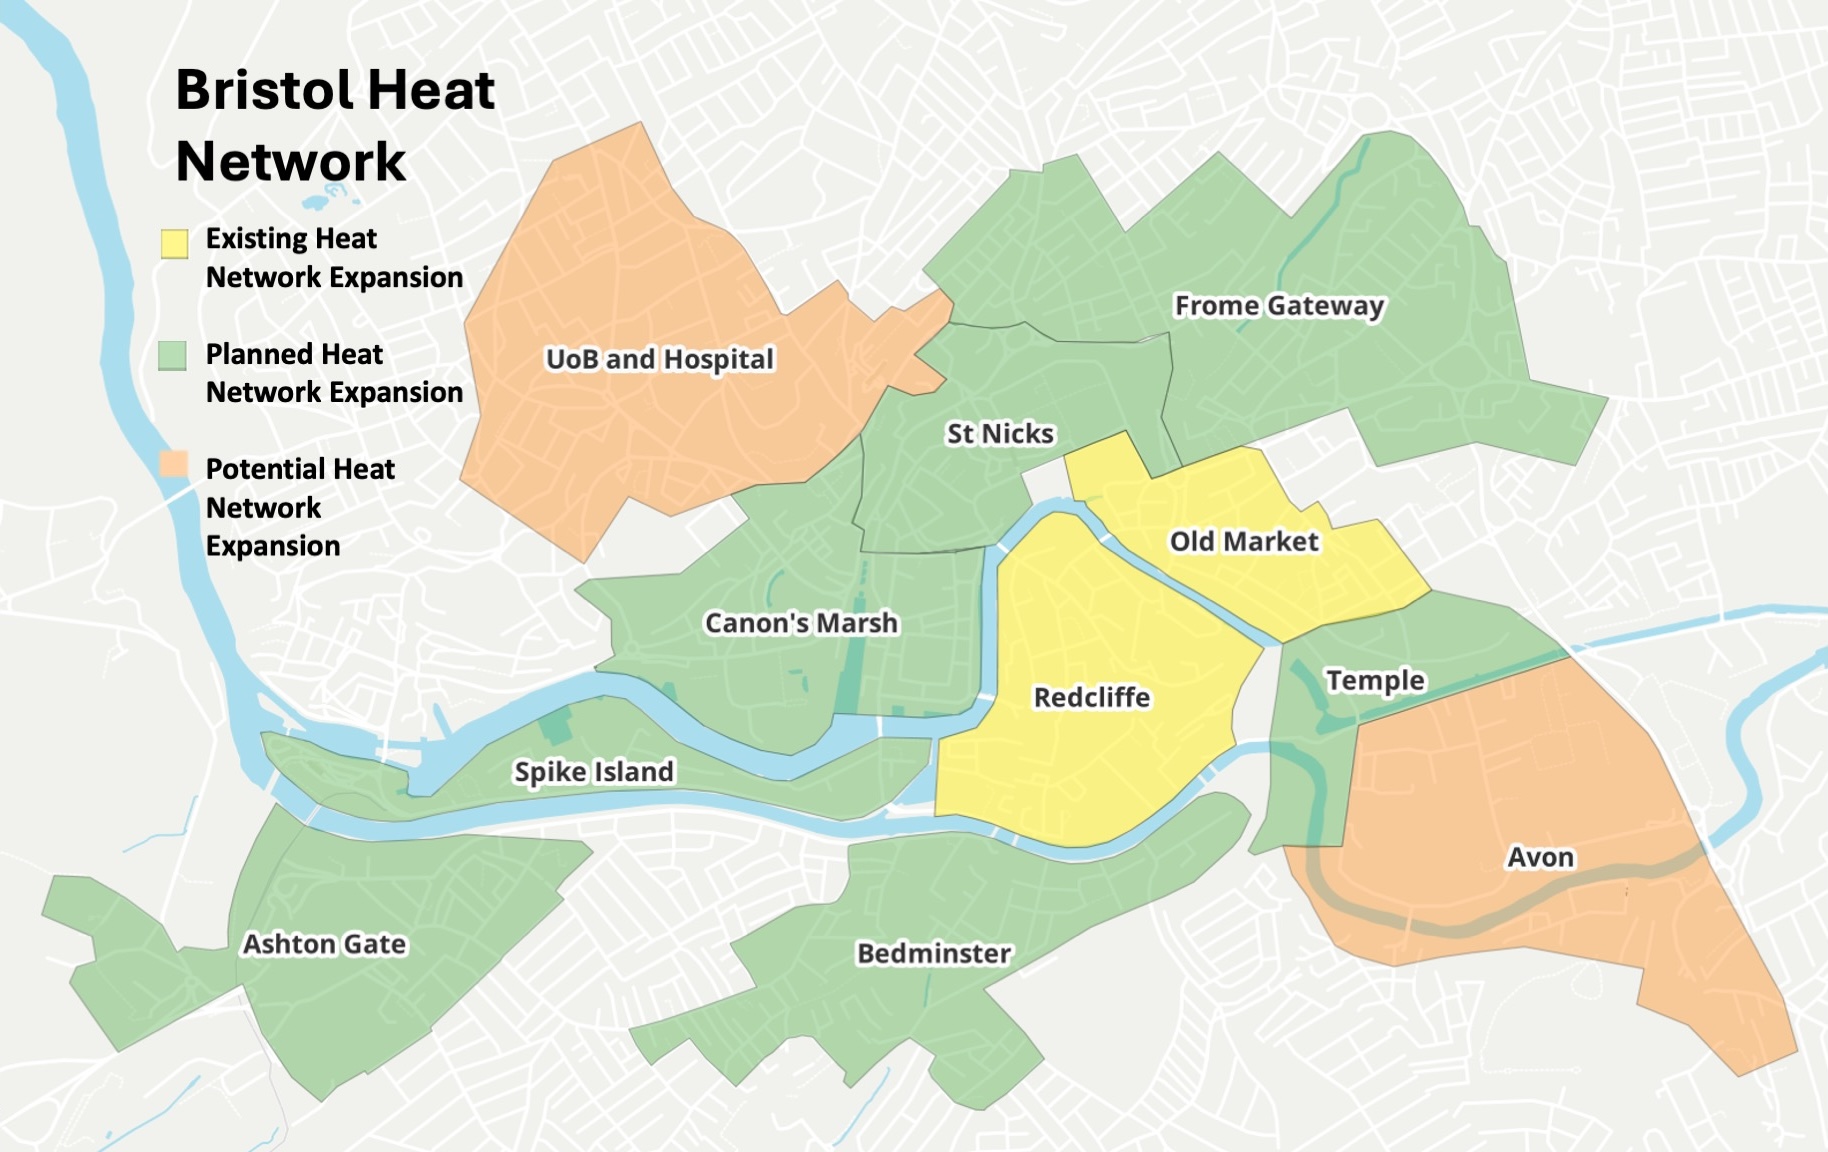 The Bristol heat network map